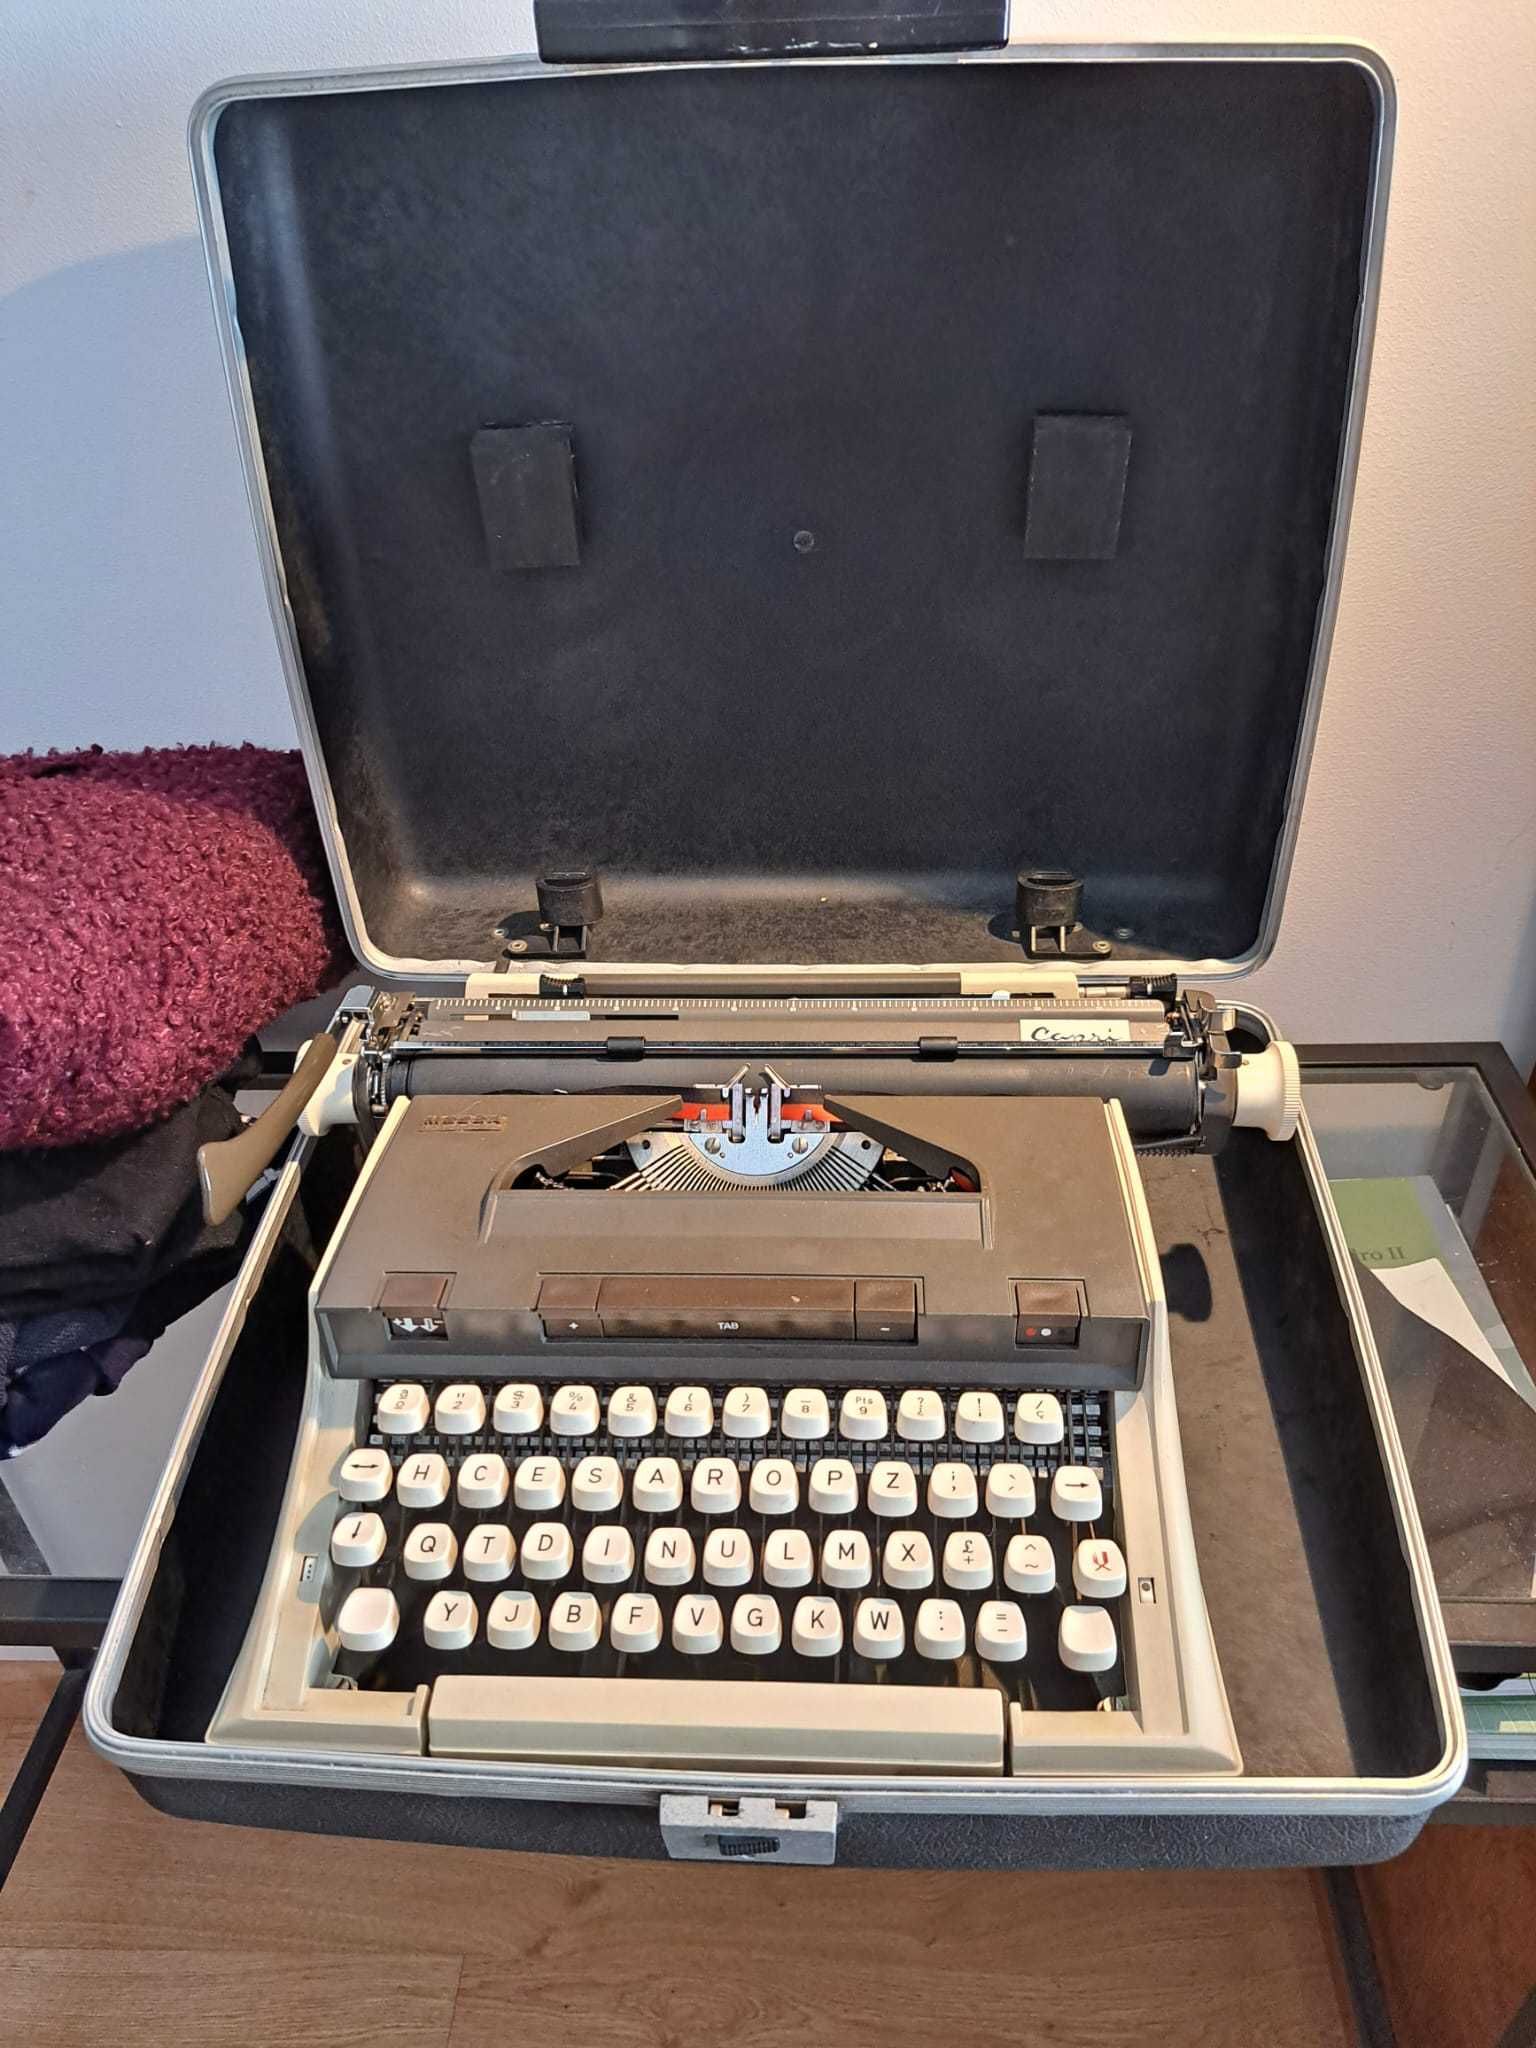 Linda e robusta maquina de escrever antiga, funcionando.